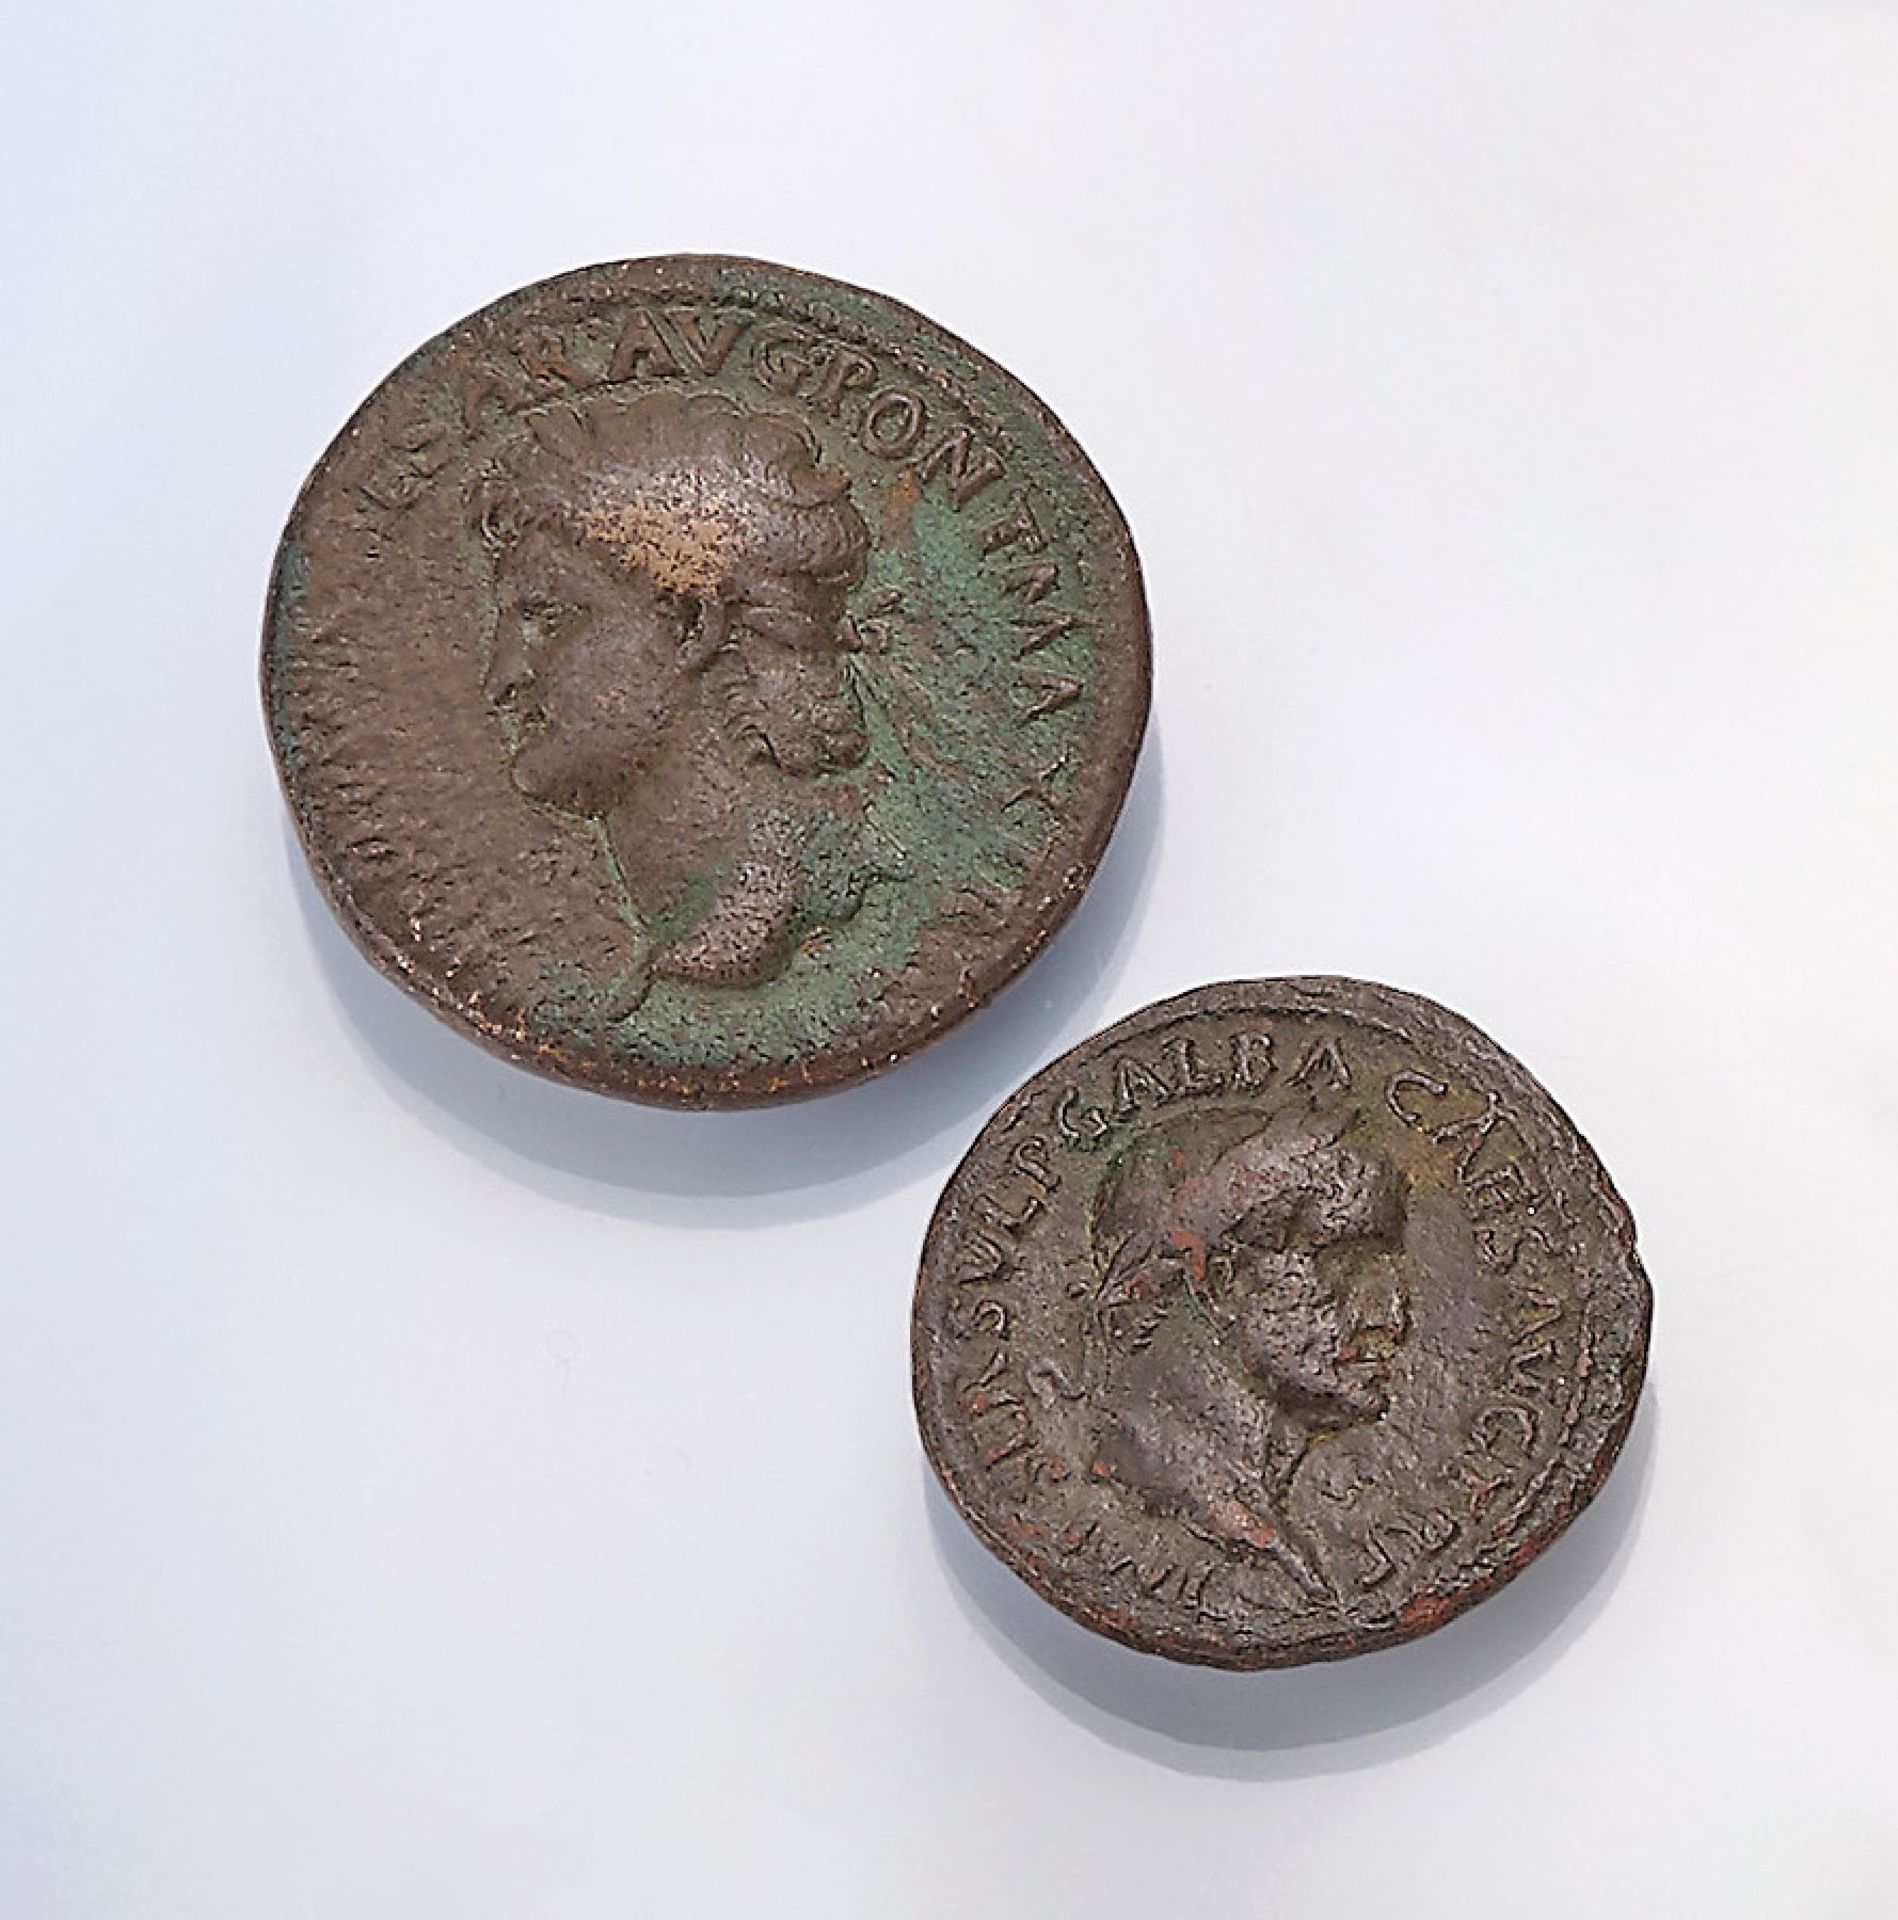 Konvolut 2 röm. Münzen, best. aus: 1 x Nero, 54-68 n.Chr., IMP NERO CAESAR AVG PONT MAX TR P, 1 x